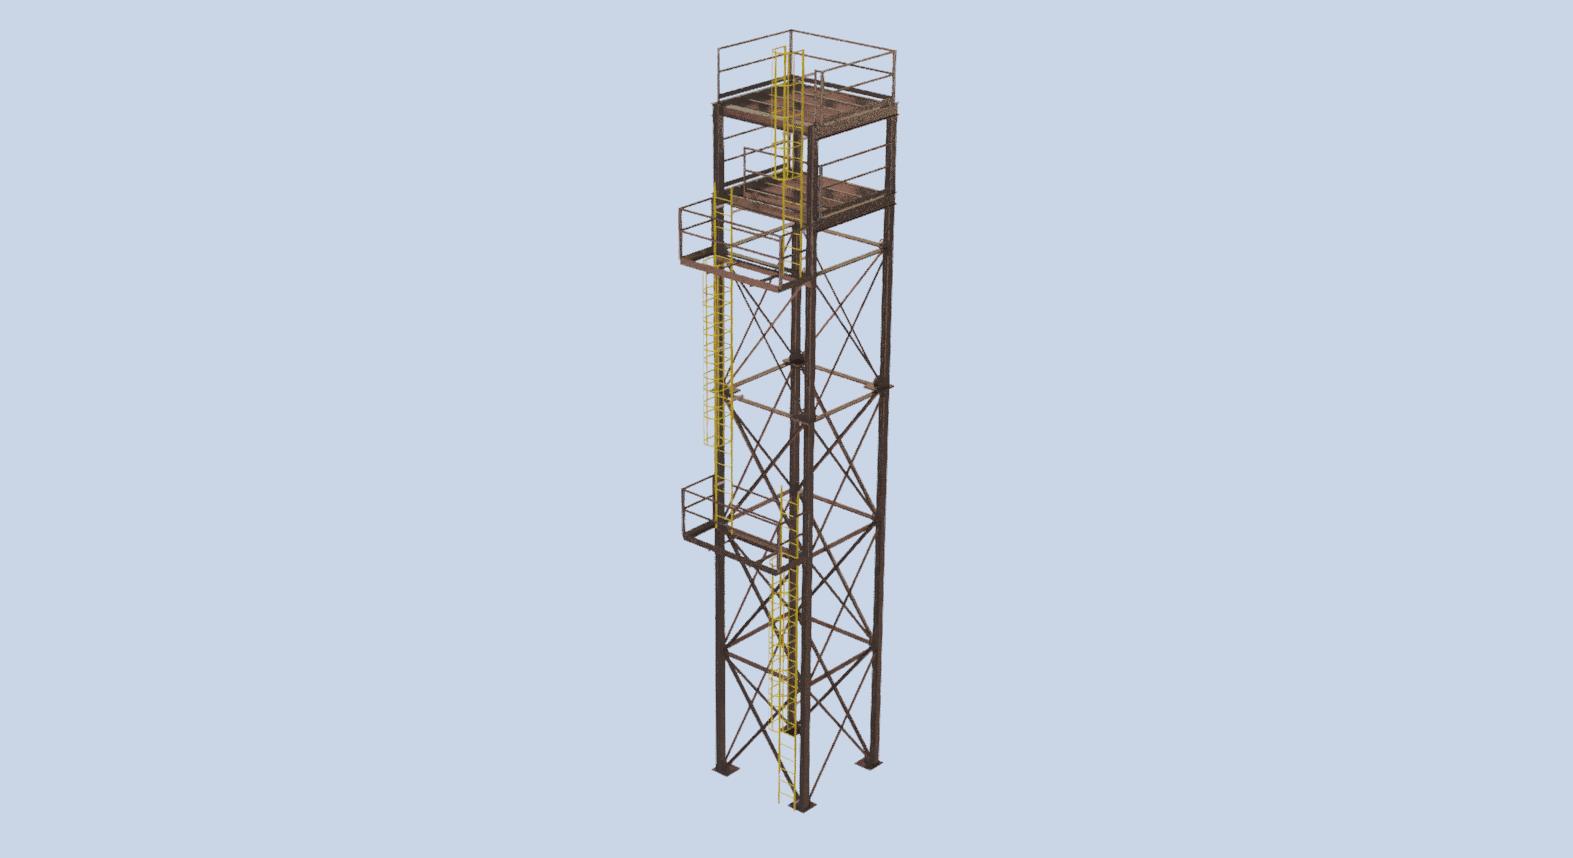 https://0201.nccdn.net/1_2/000/000/0df/c7c/tower-at-building--002-.jpg